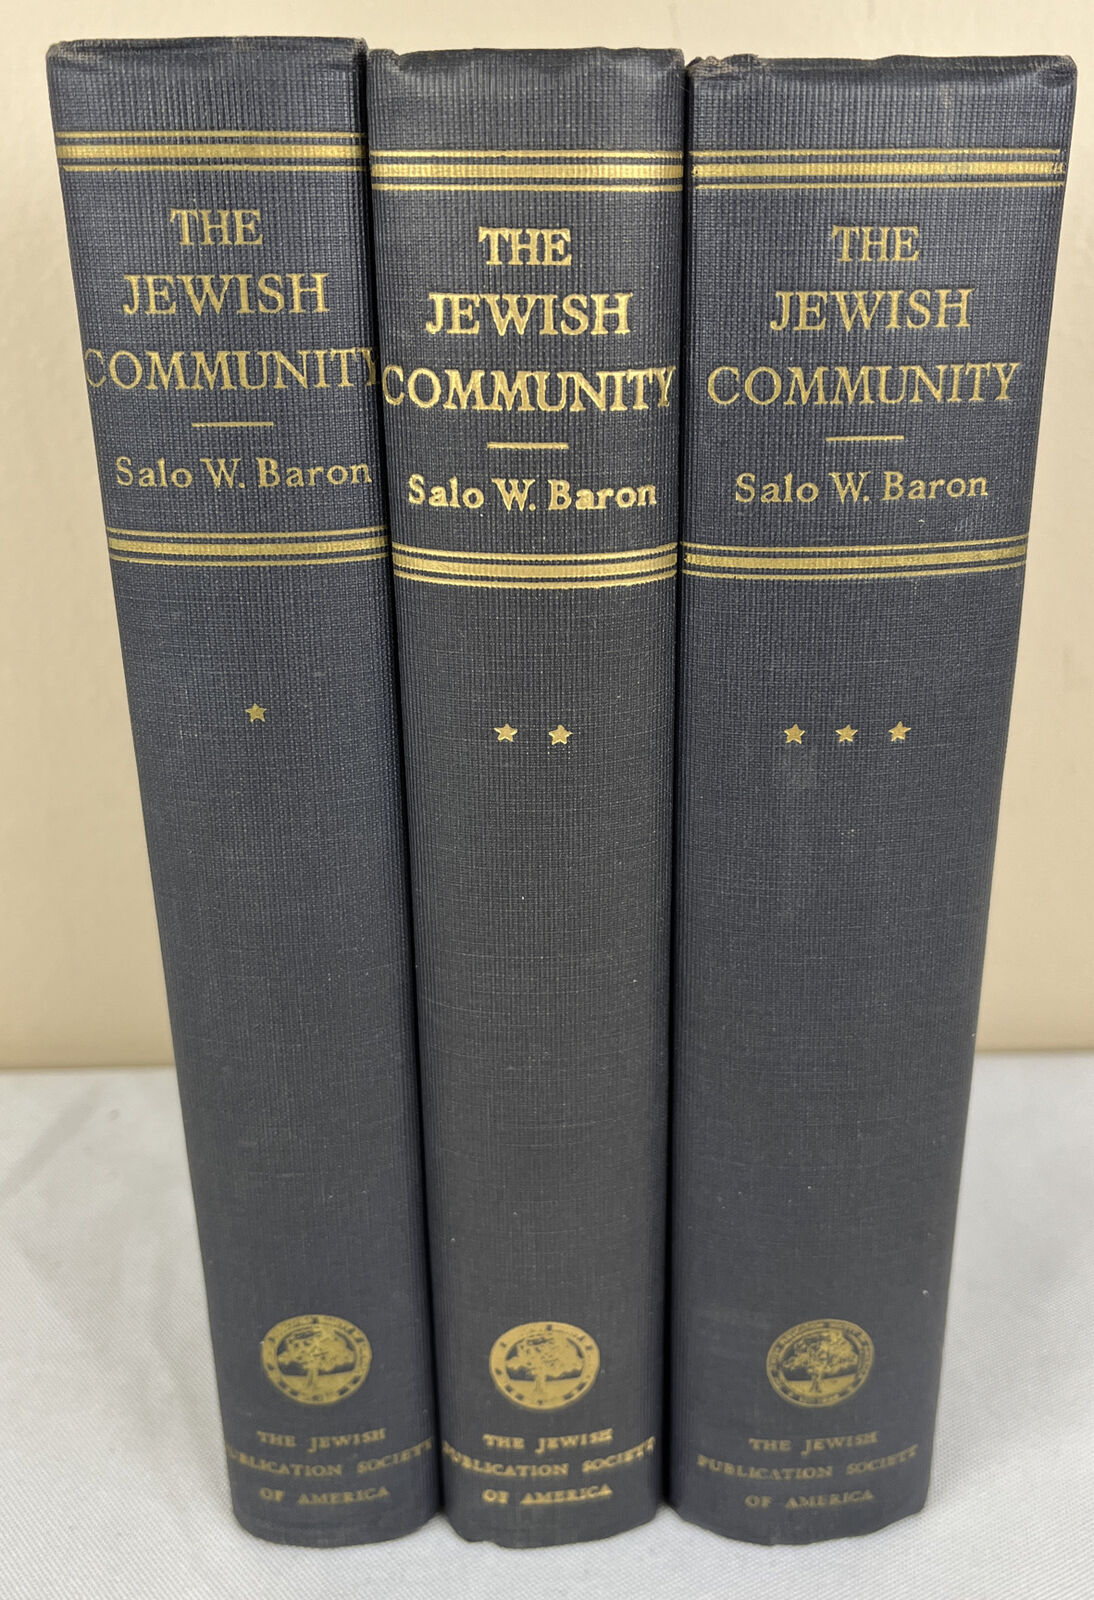 THE JEWISH COMMUNITY by Salo Baron - 1948 - Complete 3 Volume Set